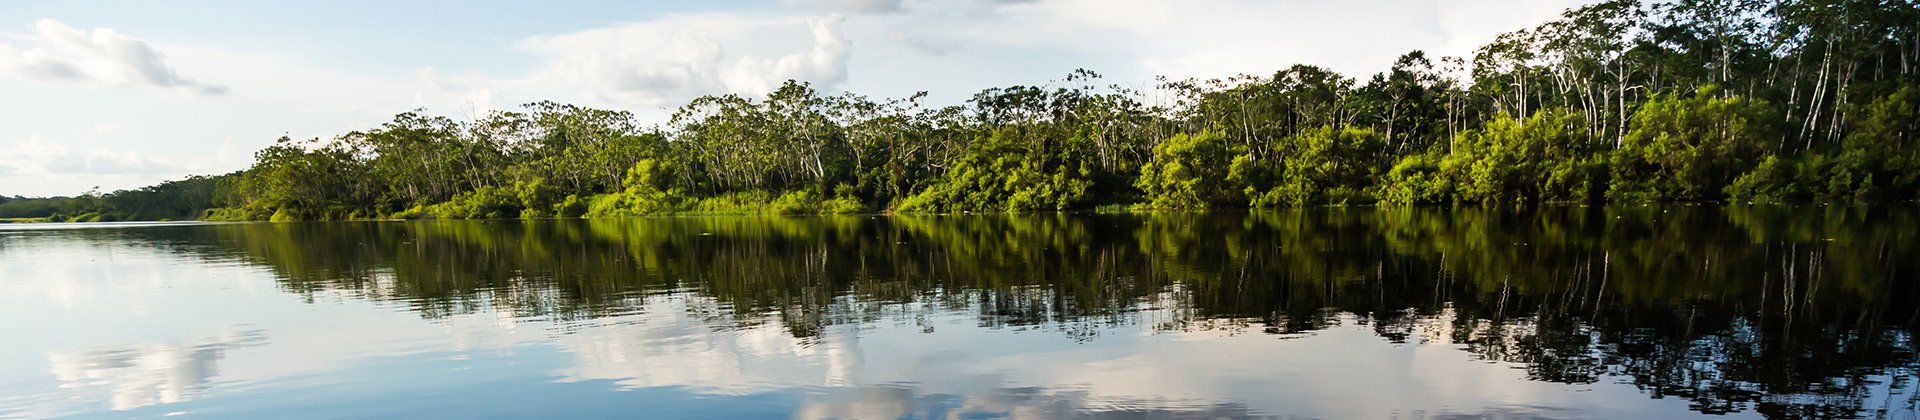 Amazon River, Iquitos